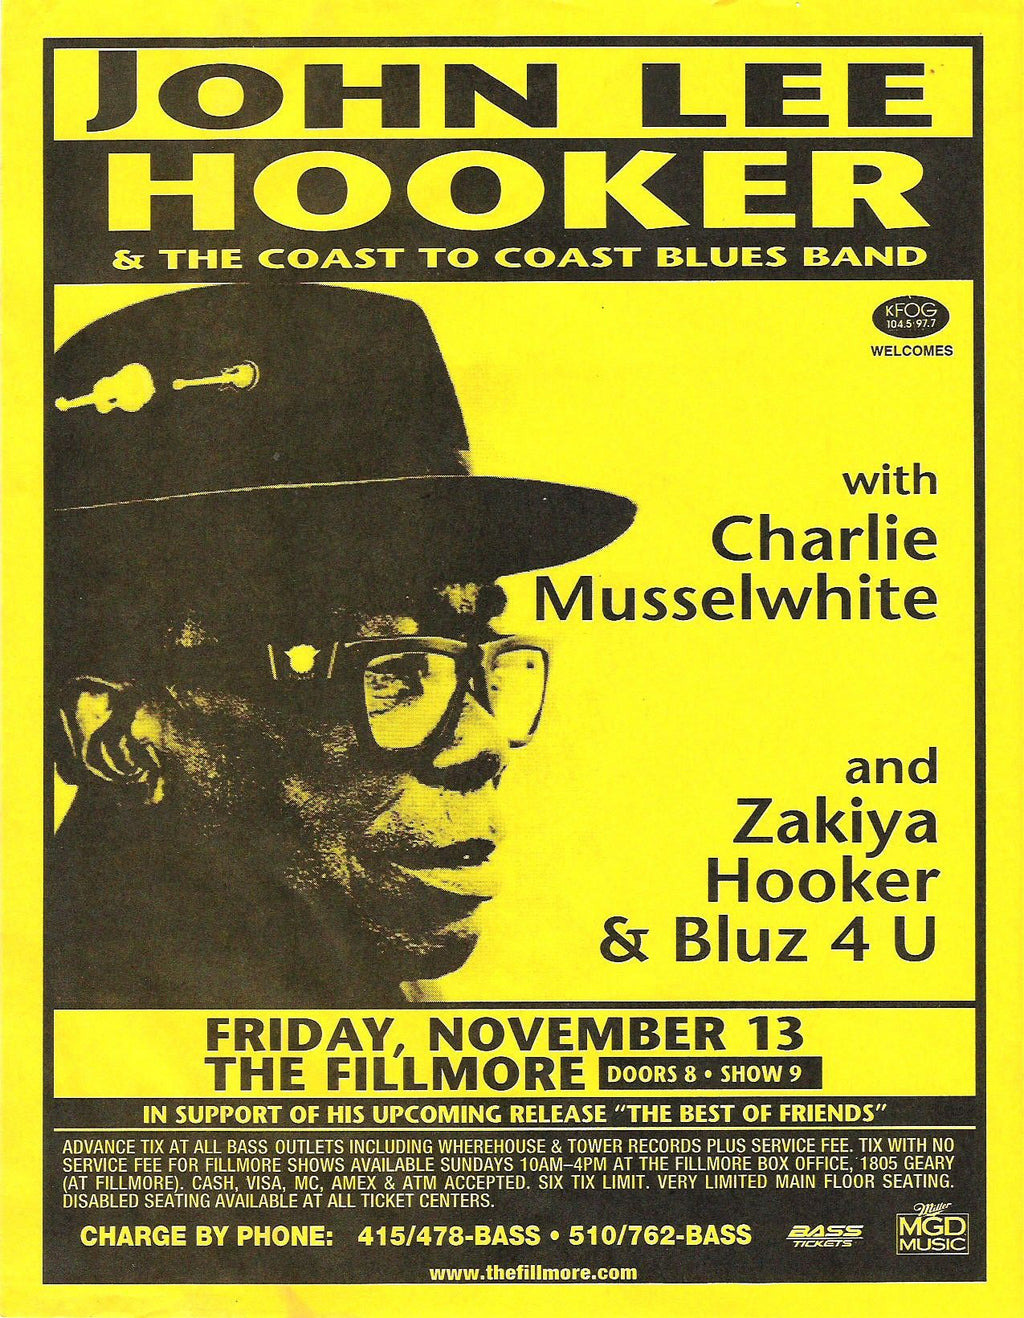 John Lee Hooker At The Fillmore Vintage Music Art Poster 0923